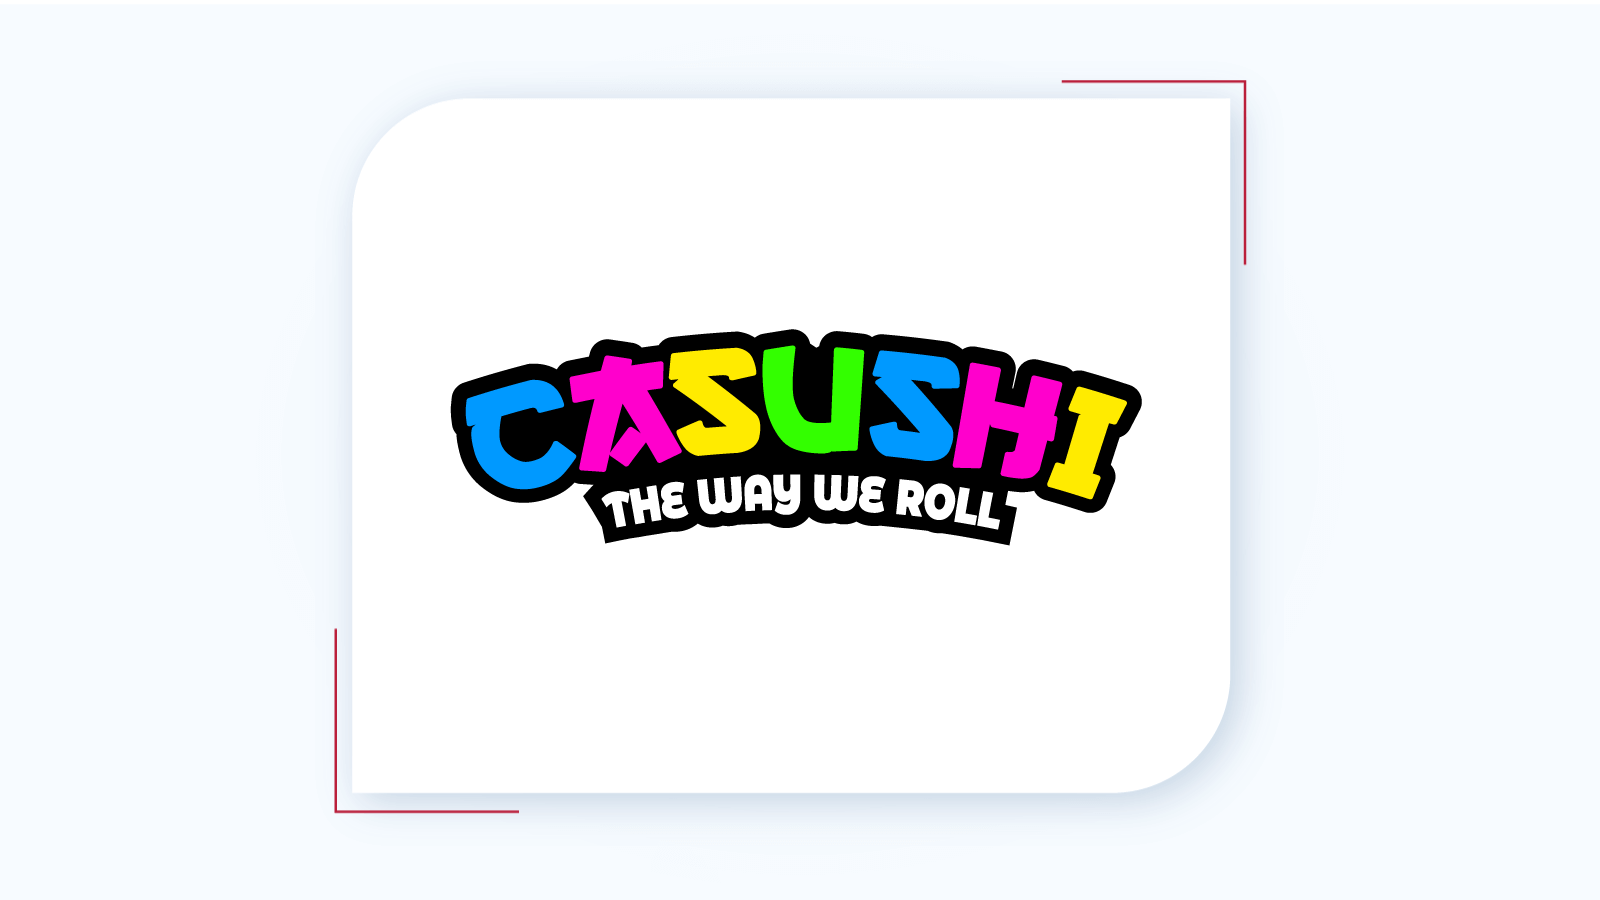 Casushi-Casino-Best-£20-deposit-casino-bonus-in-the-UK-overall